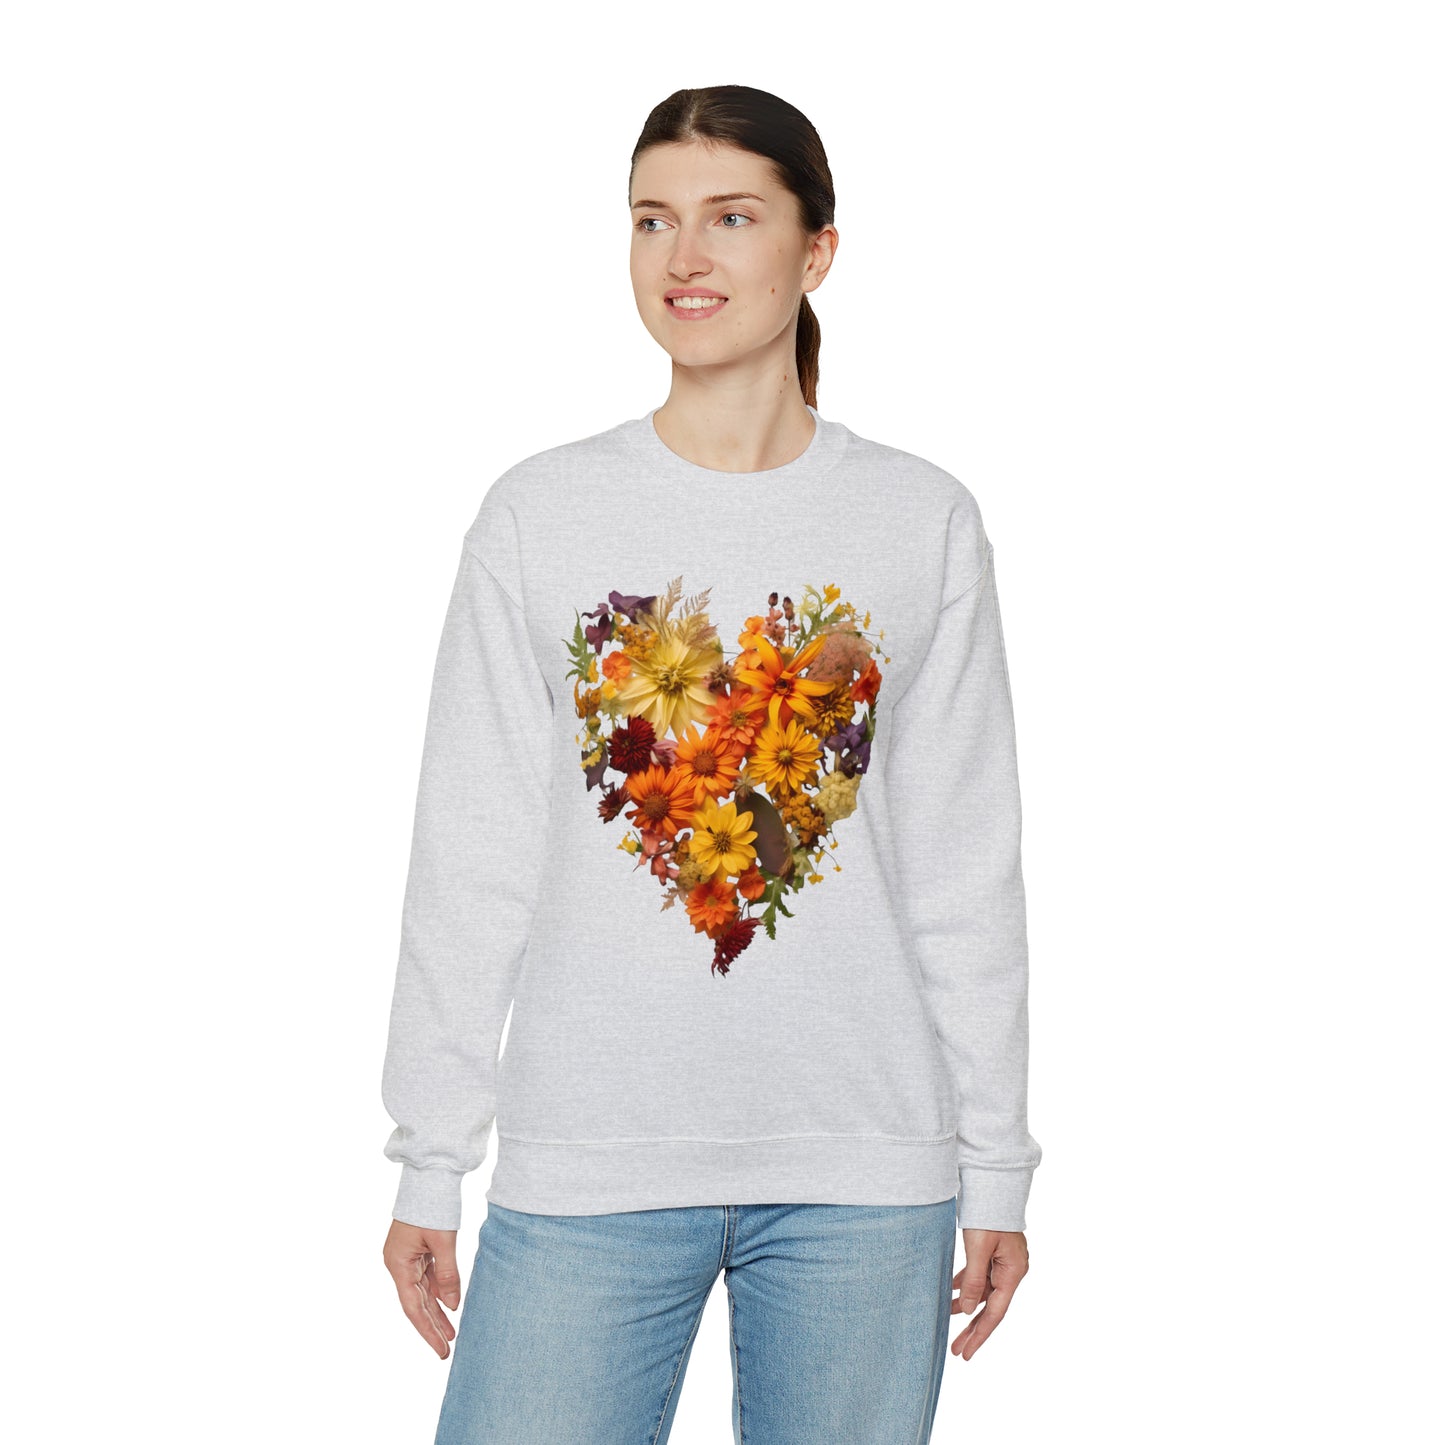 "Heartfelt Autumn: Floral Heart Sweater"